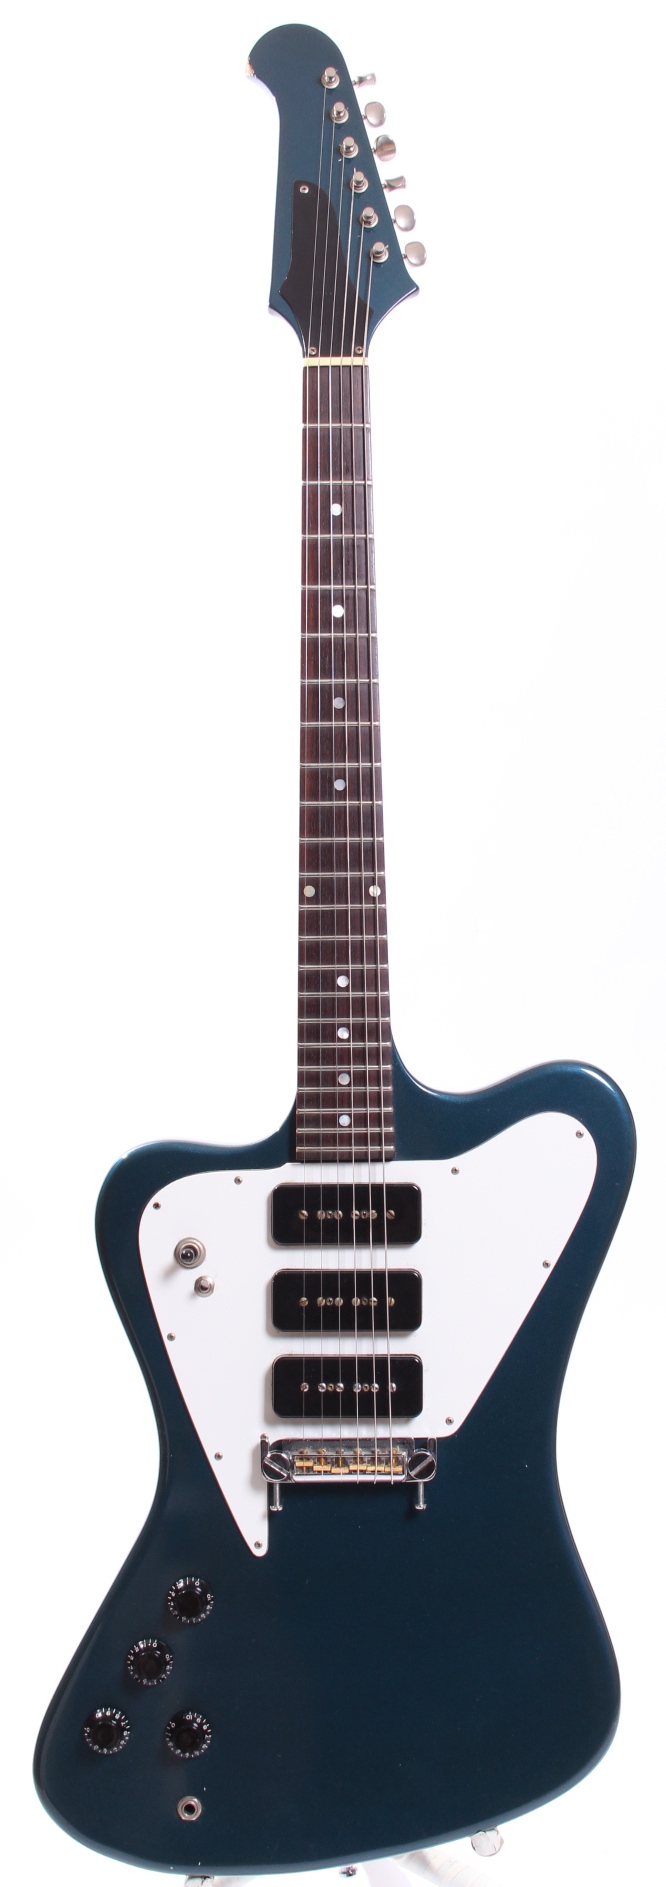 Greco Firebird III Non Reverse 1980 Pelham Blue Guitar For Sale Yeahman ...